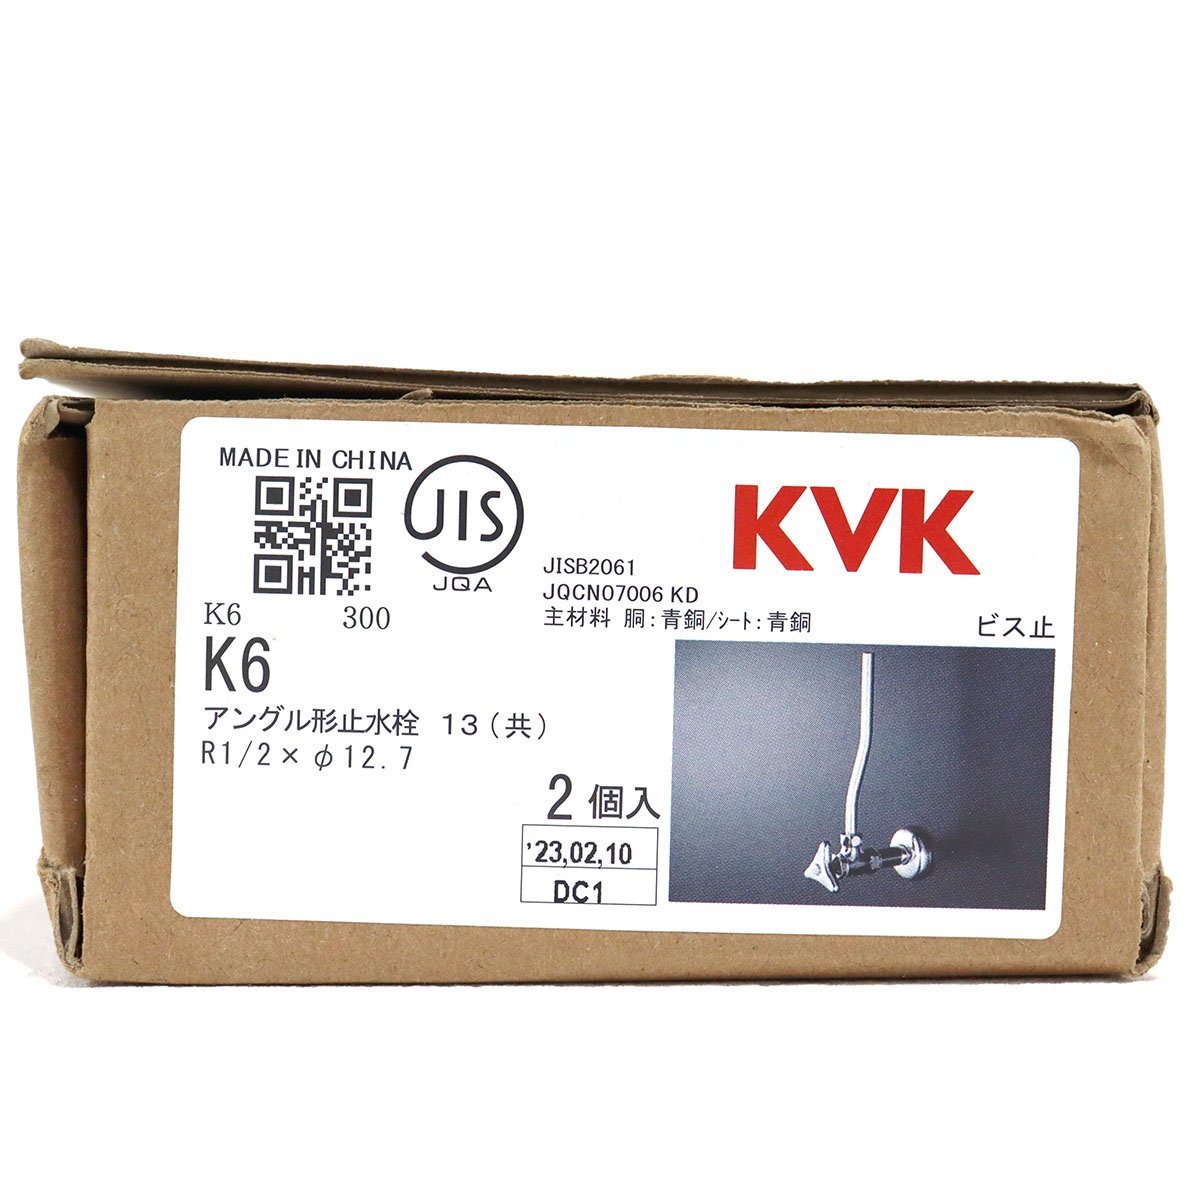 《D00325》KVK アングル形止水栓 2個入り K6 未使用品(開封済み) ■_画像8